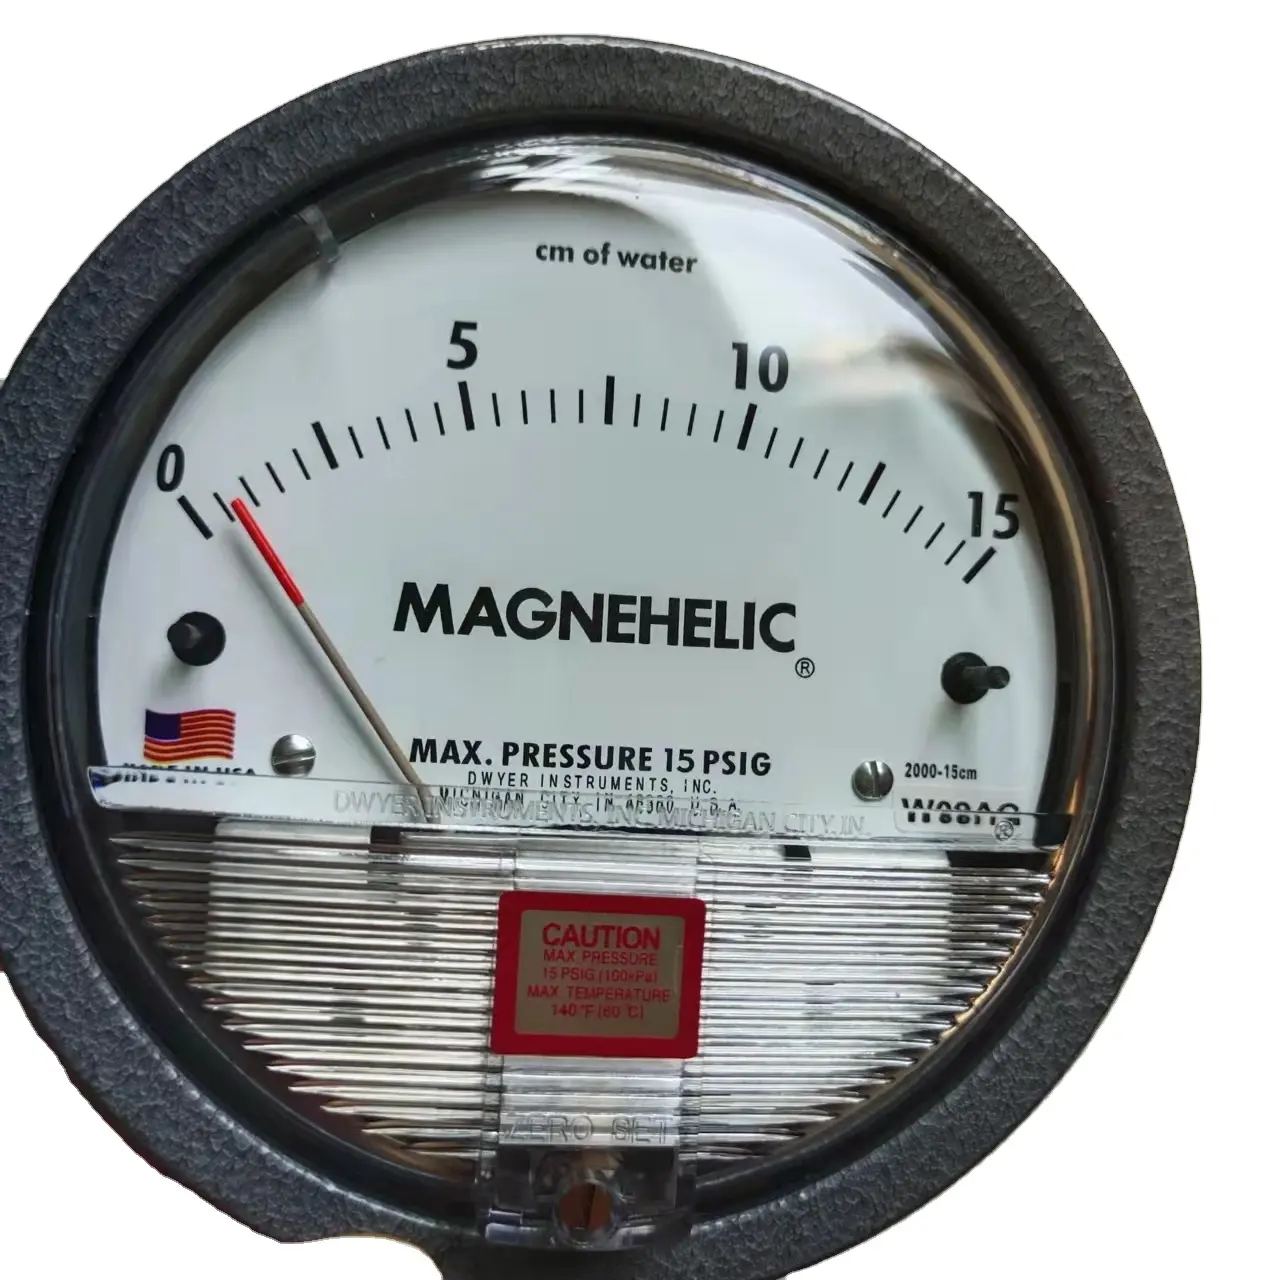 Manometro differenziale Magrfhelic originale Dwyer serie 2000 manometro differenziale 15cm